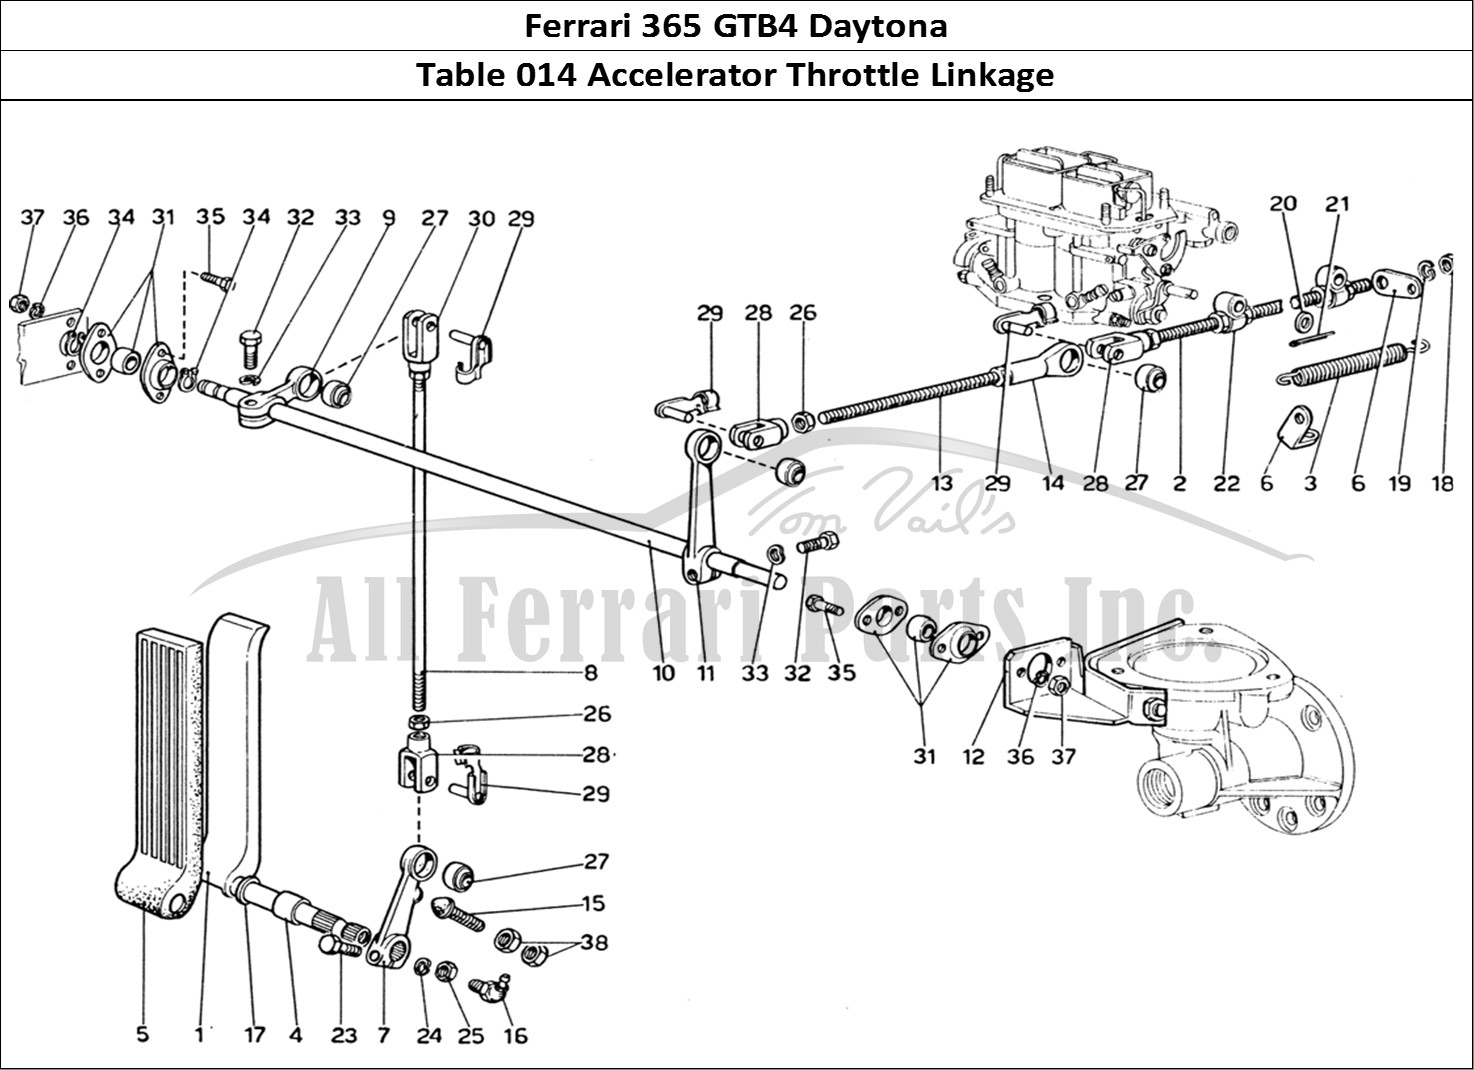 Ferrari Parts Ferrari 365 GTB4 Daytona (1969) Page 014 Accelerator Control